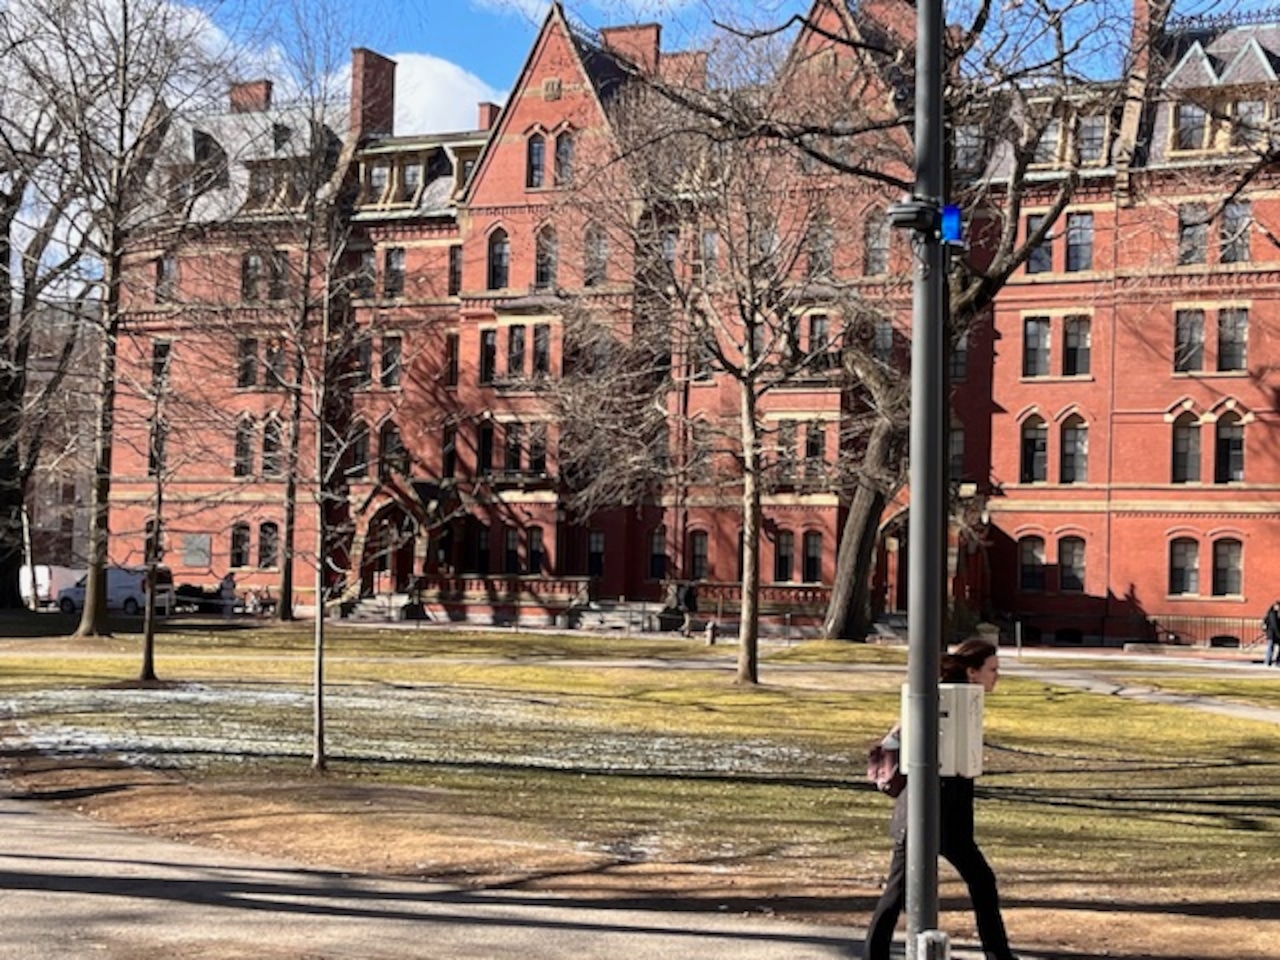 Harvard, MIT, Tufts, UMass Amherst receive failing grades in ADLs campus antisemitism report [Video]